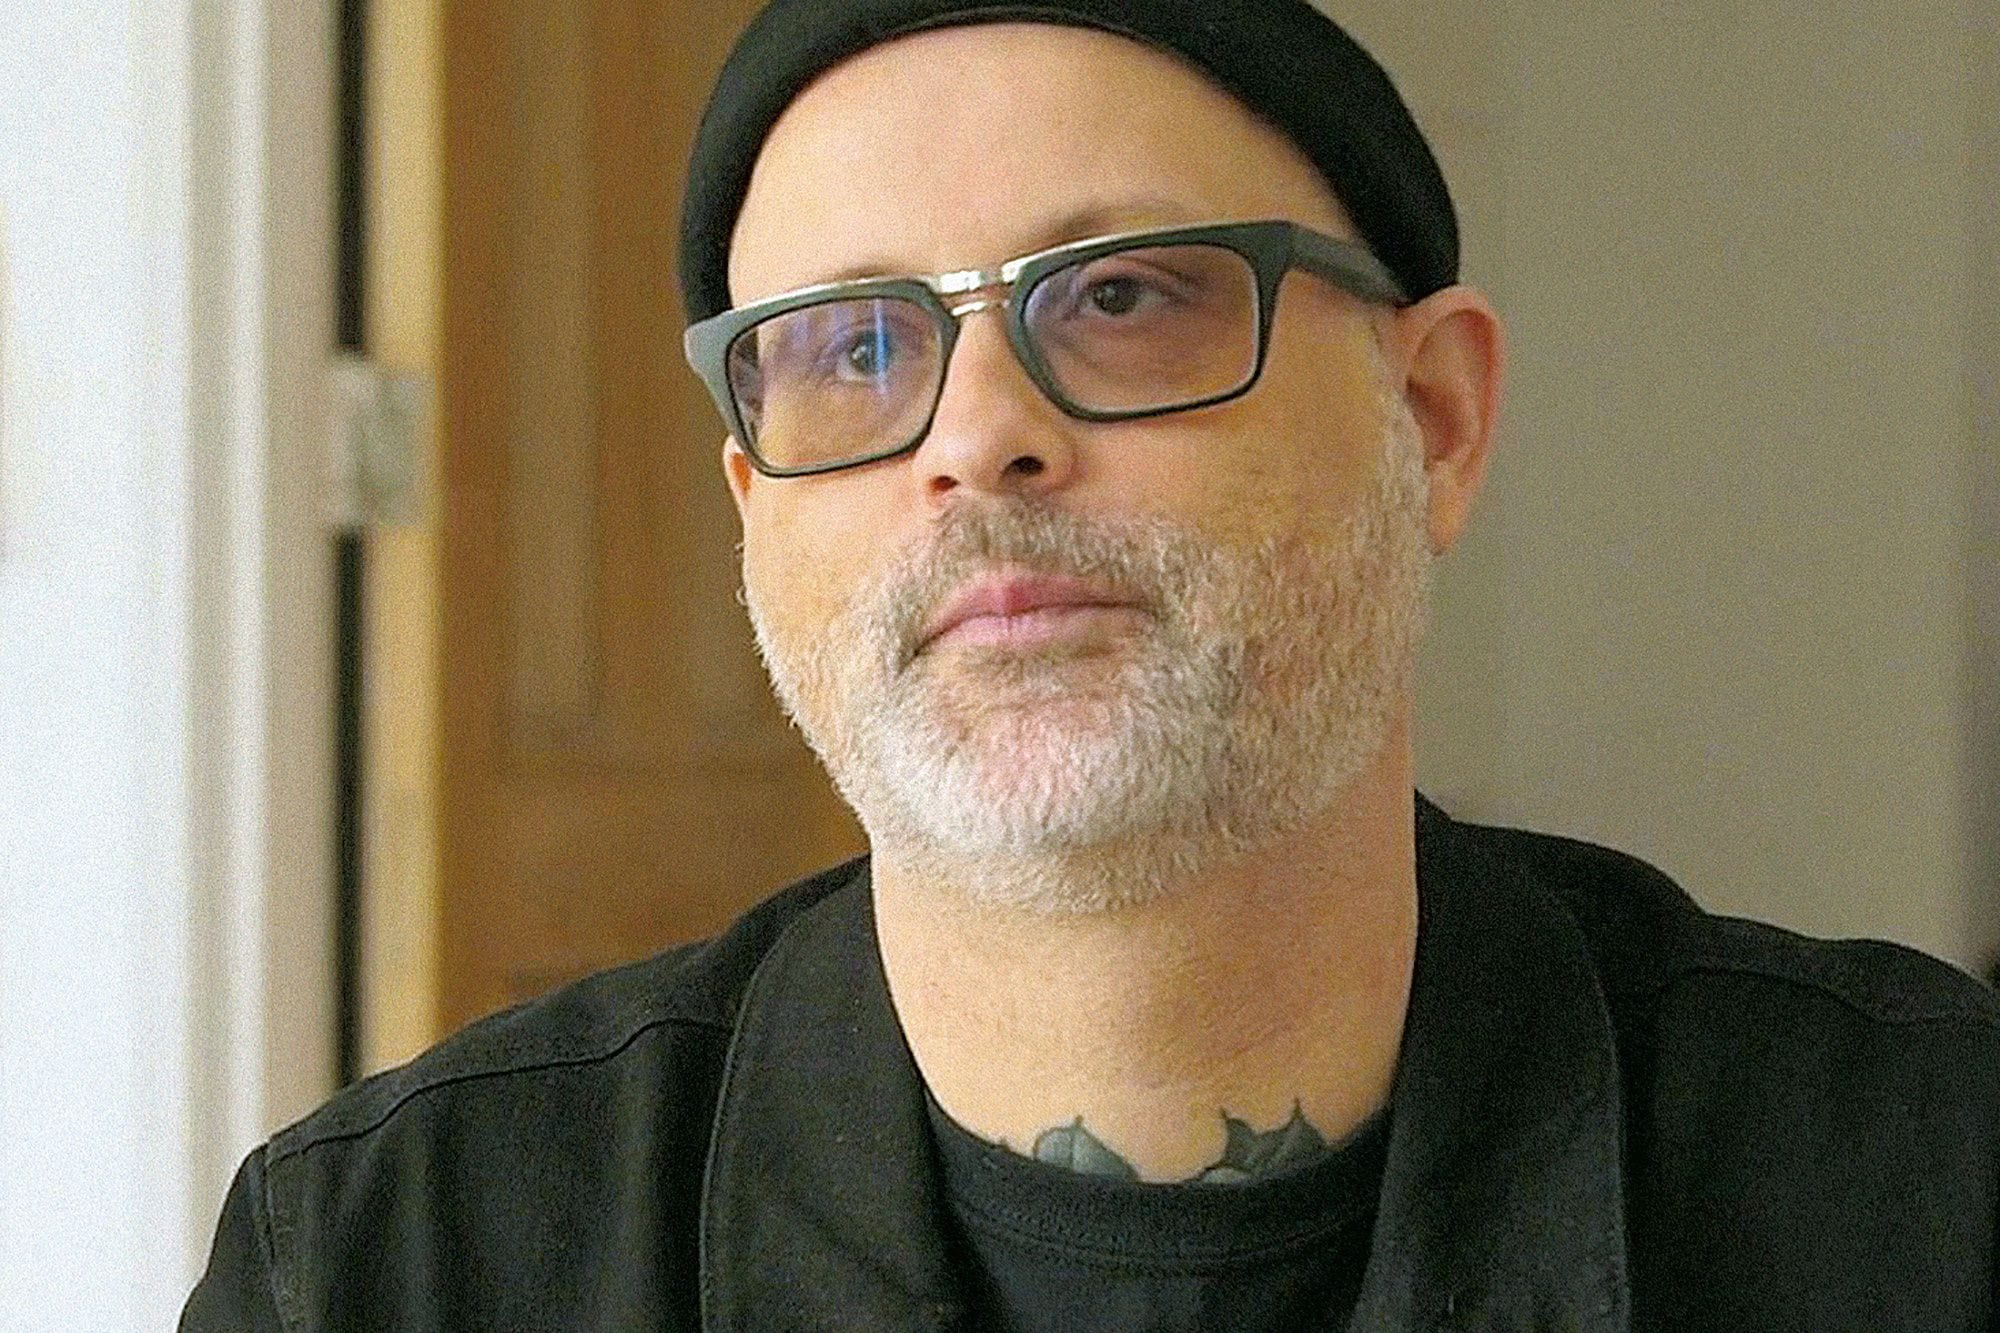 Director Denis Côté on Making Film Fearlessly